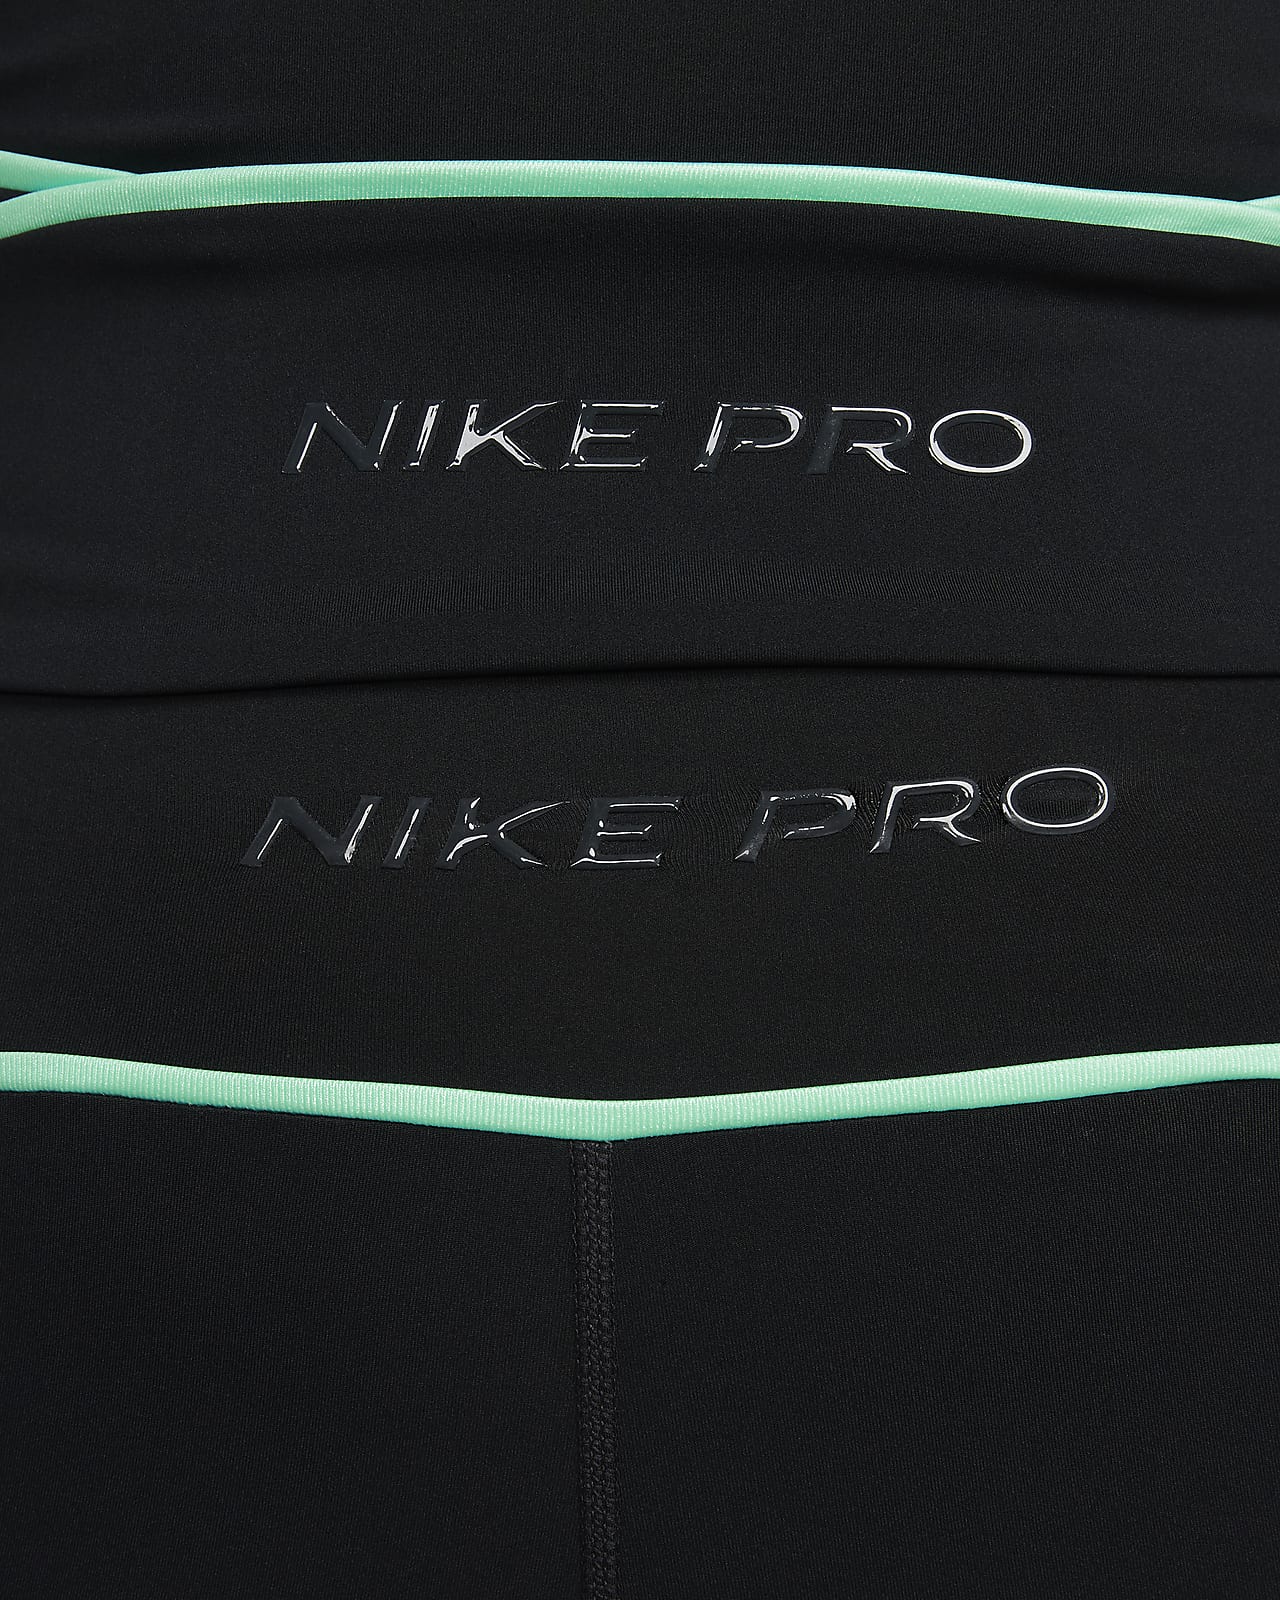 Nike Pro Women's Mid-Rise 7/8 Training Leggings.